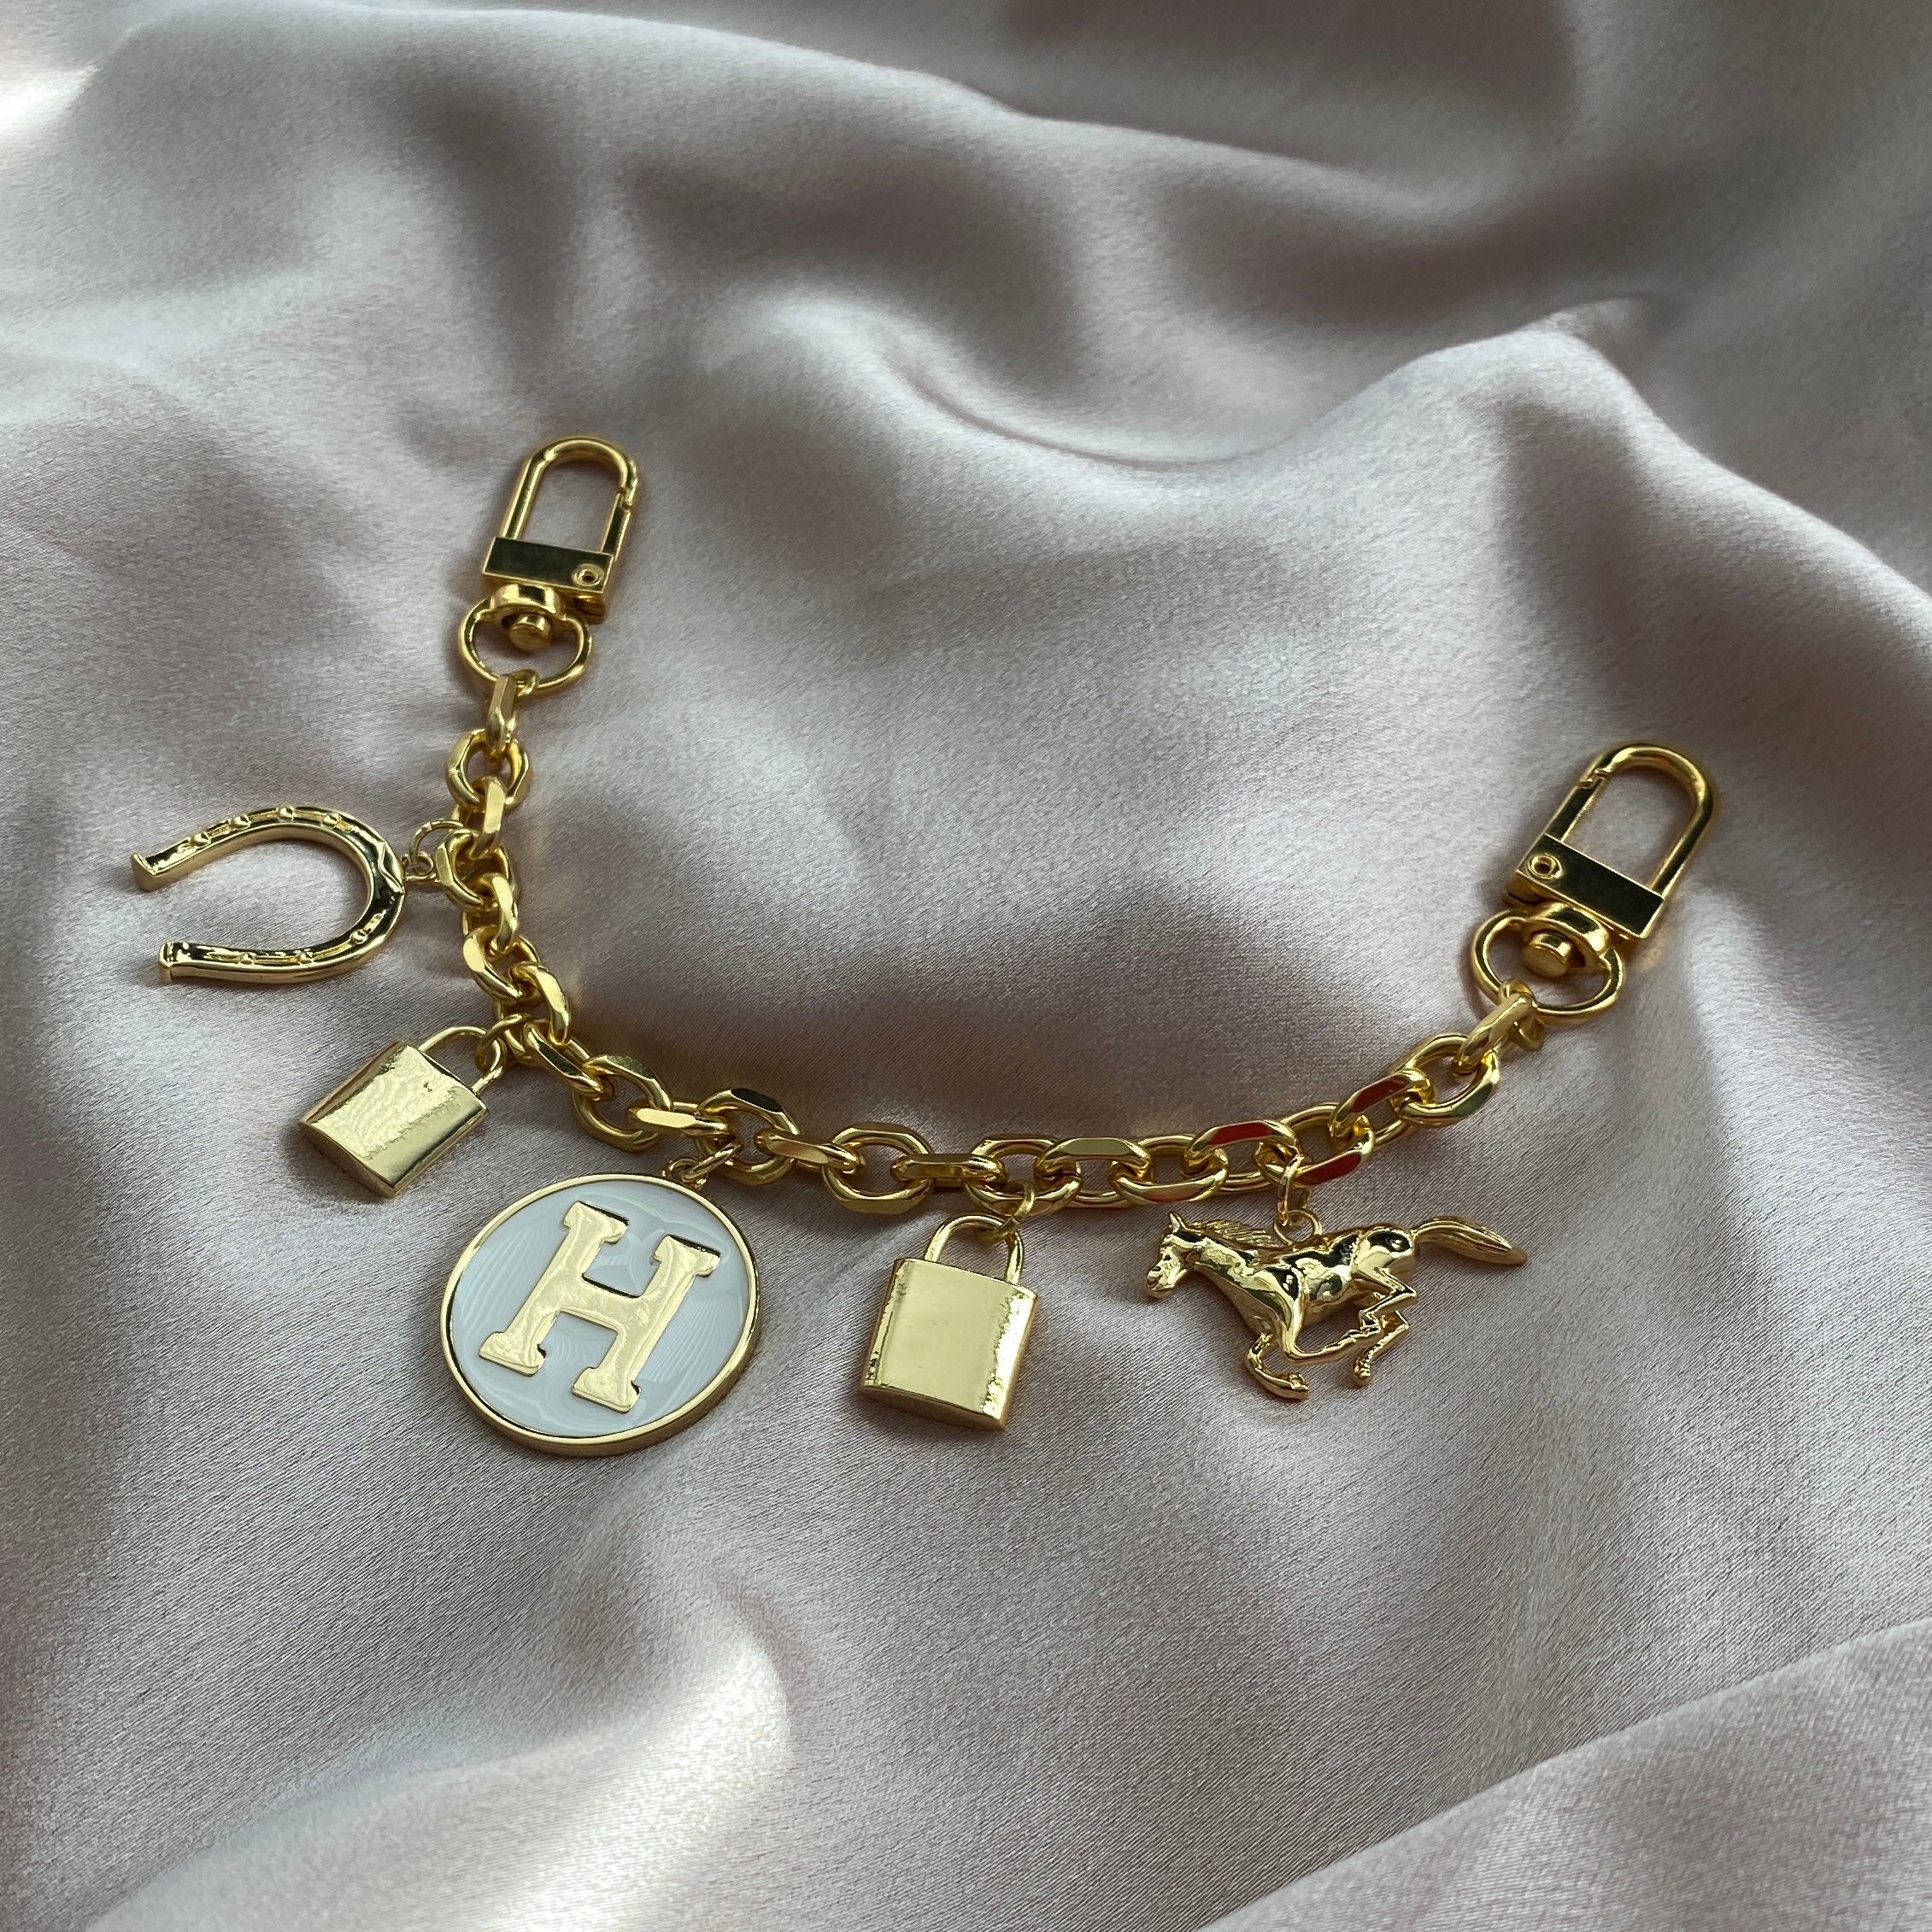 Hermes Breloque Charm Gold for Birkin or Kelly Bag